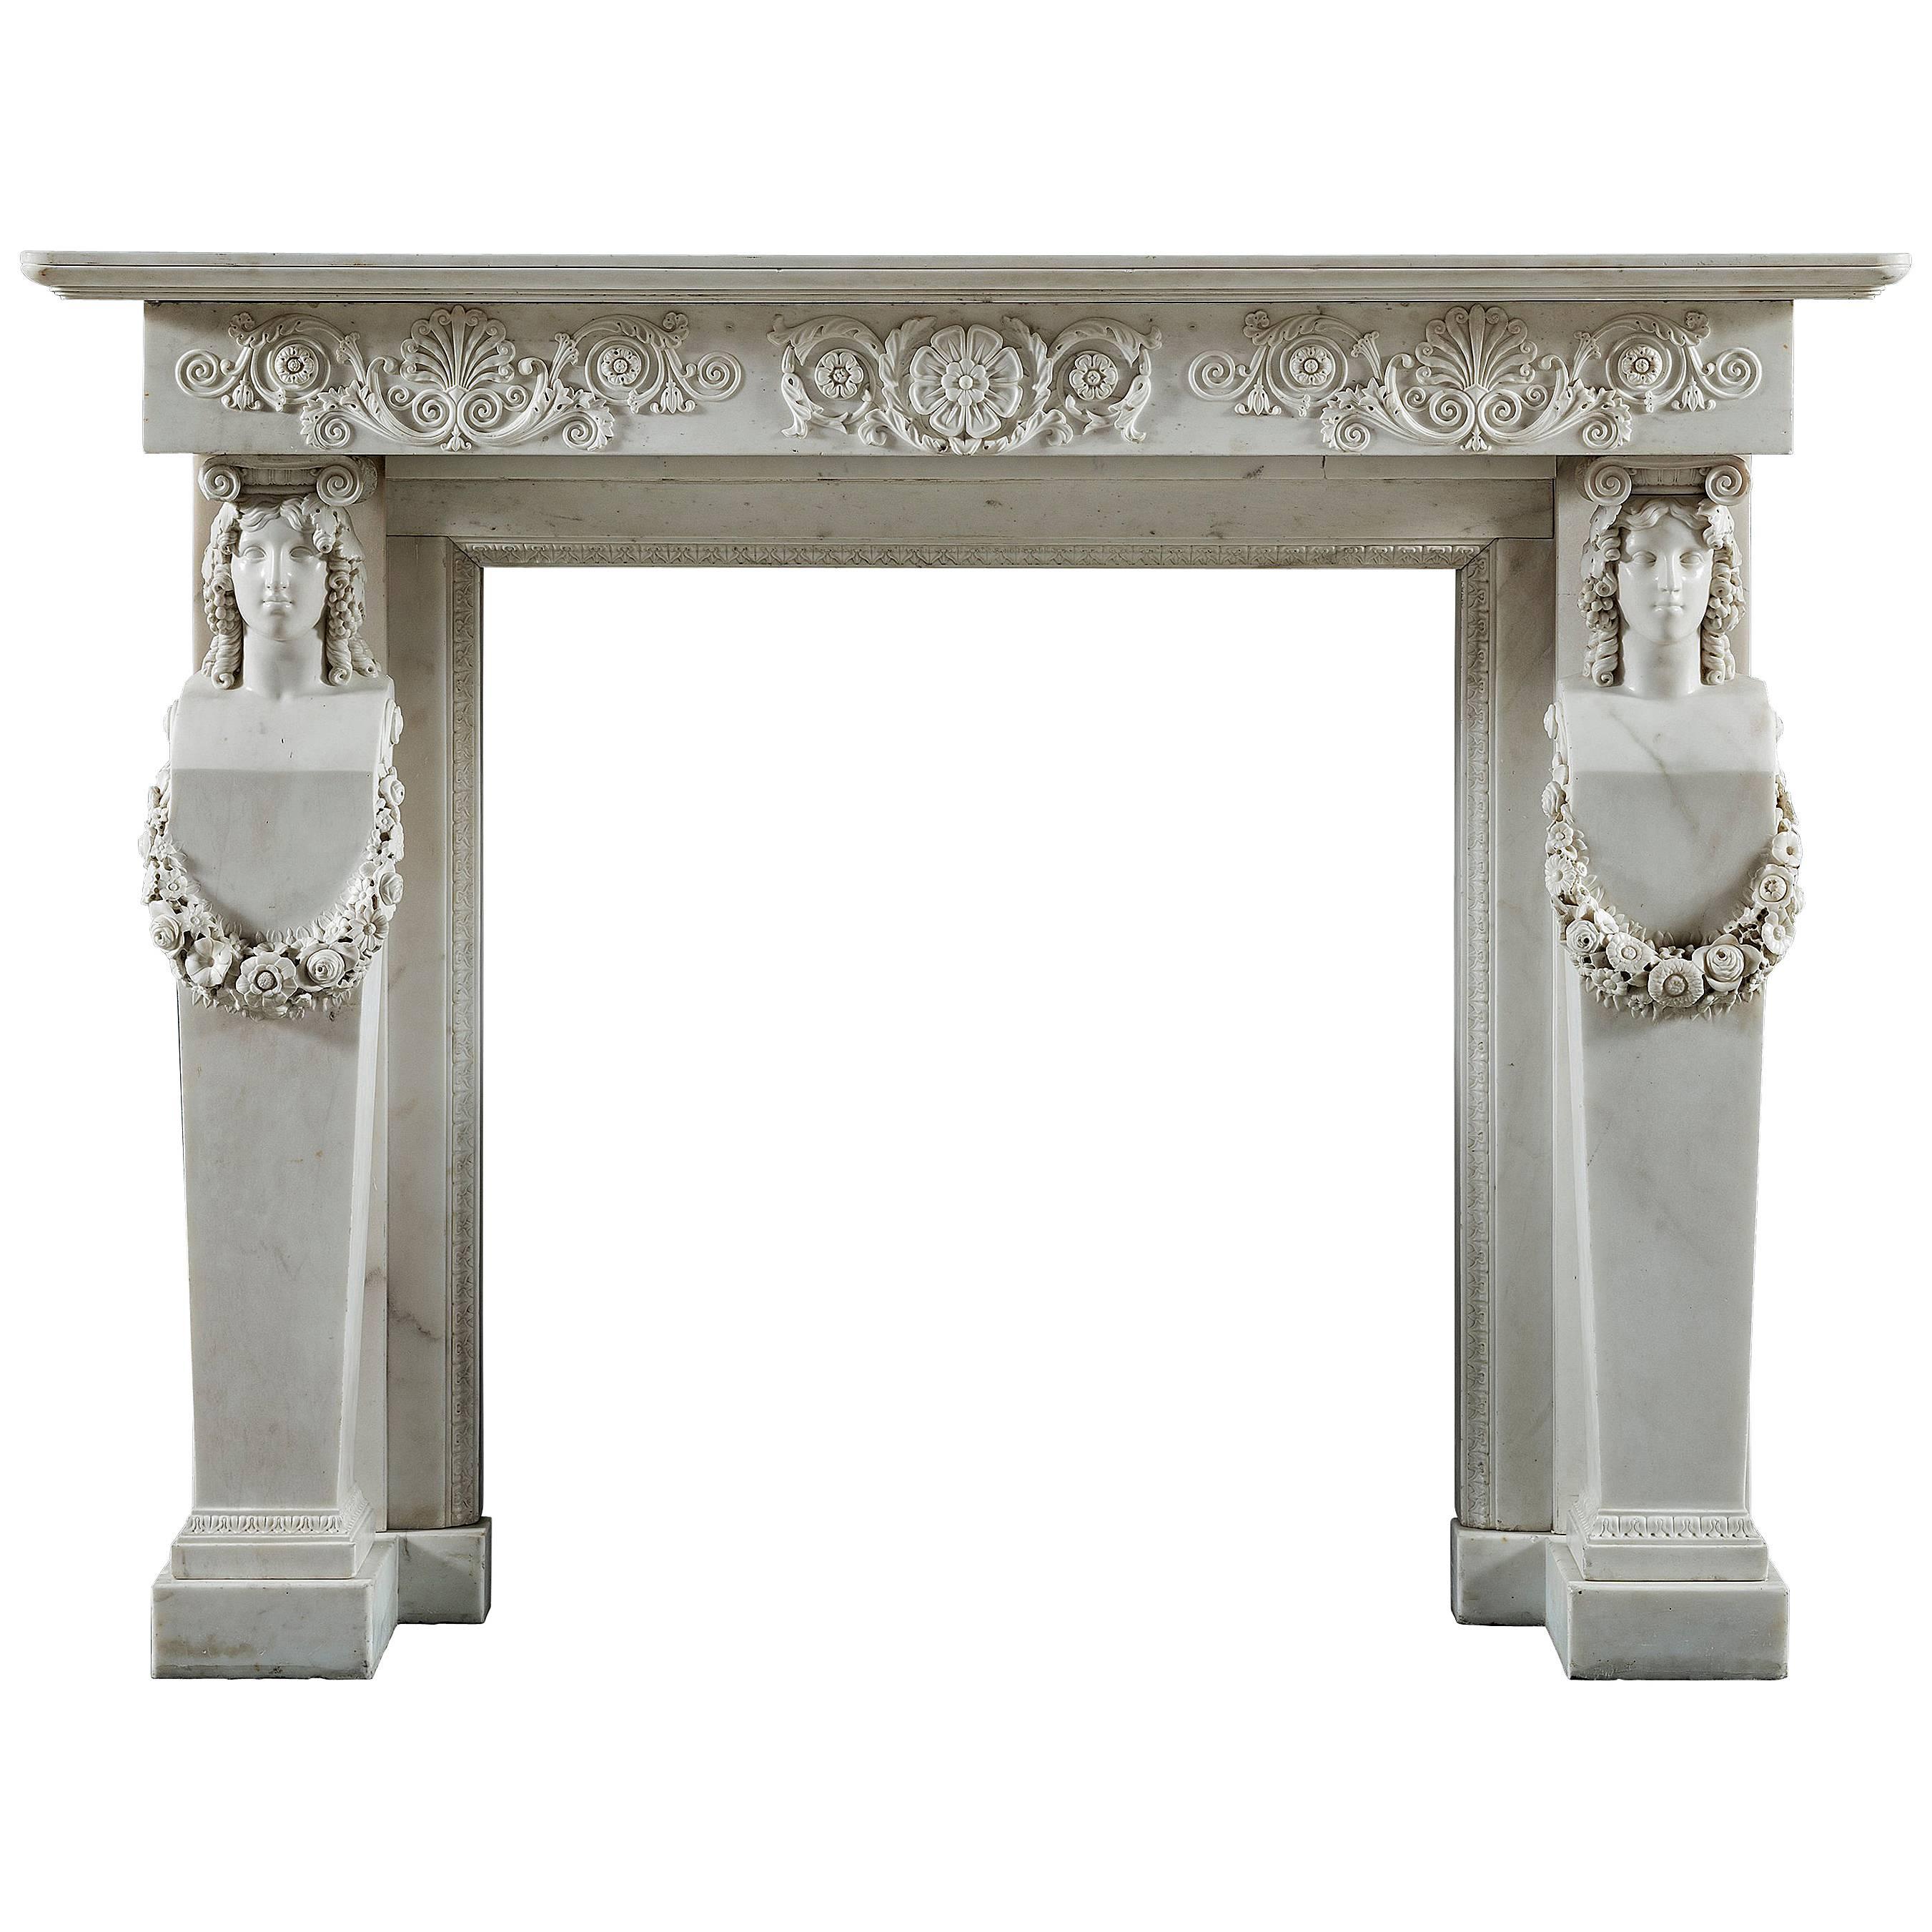 Antique Regency Grecian Revival Fireplace Mantel with Cartyatid / Term Legs